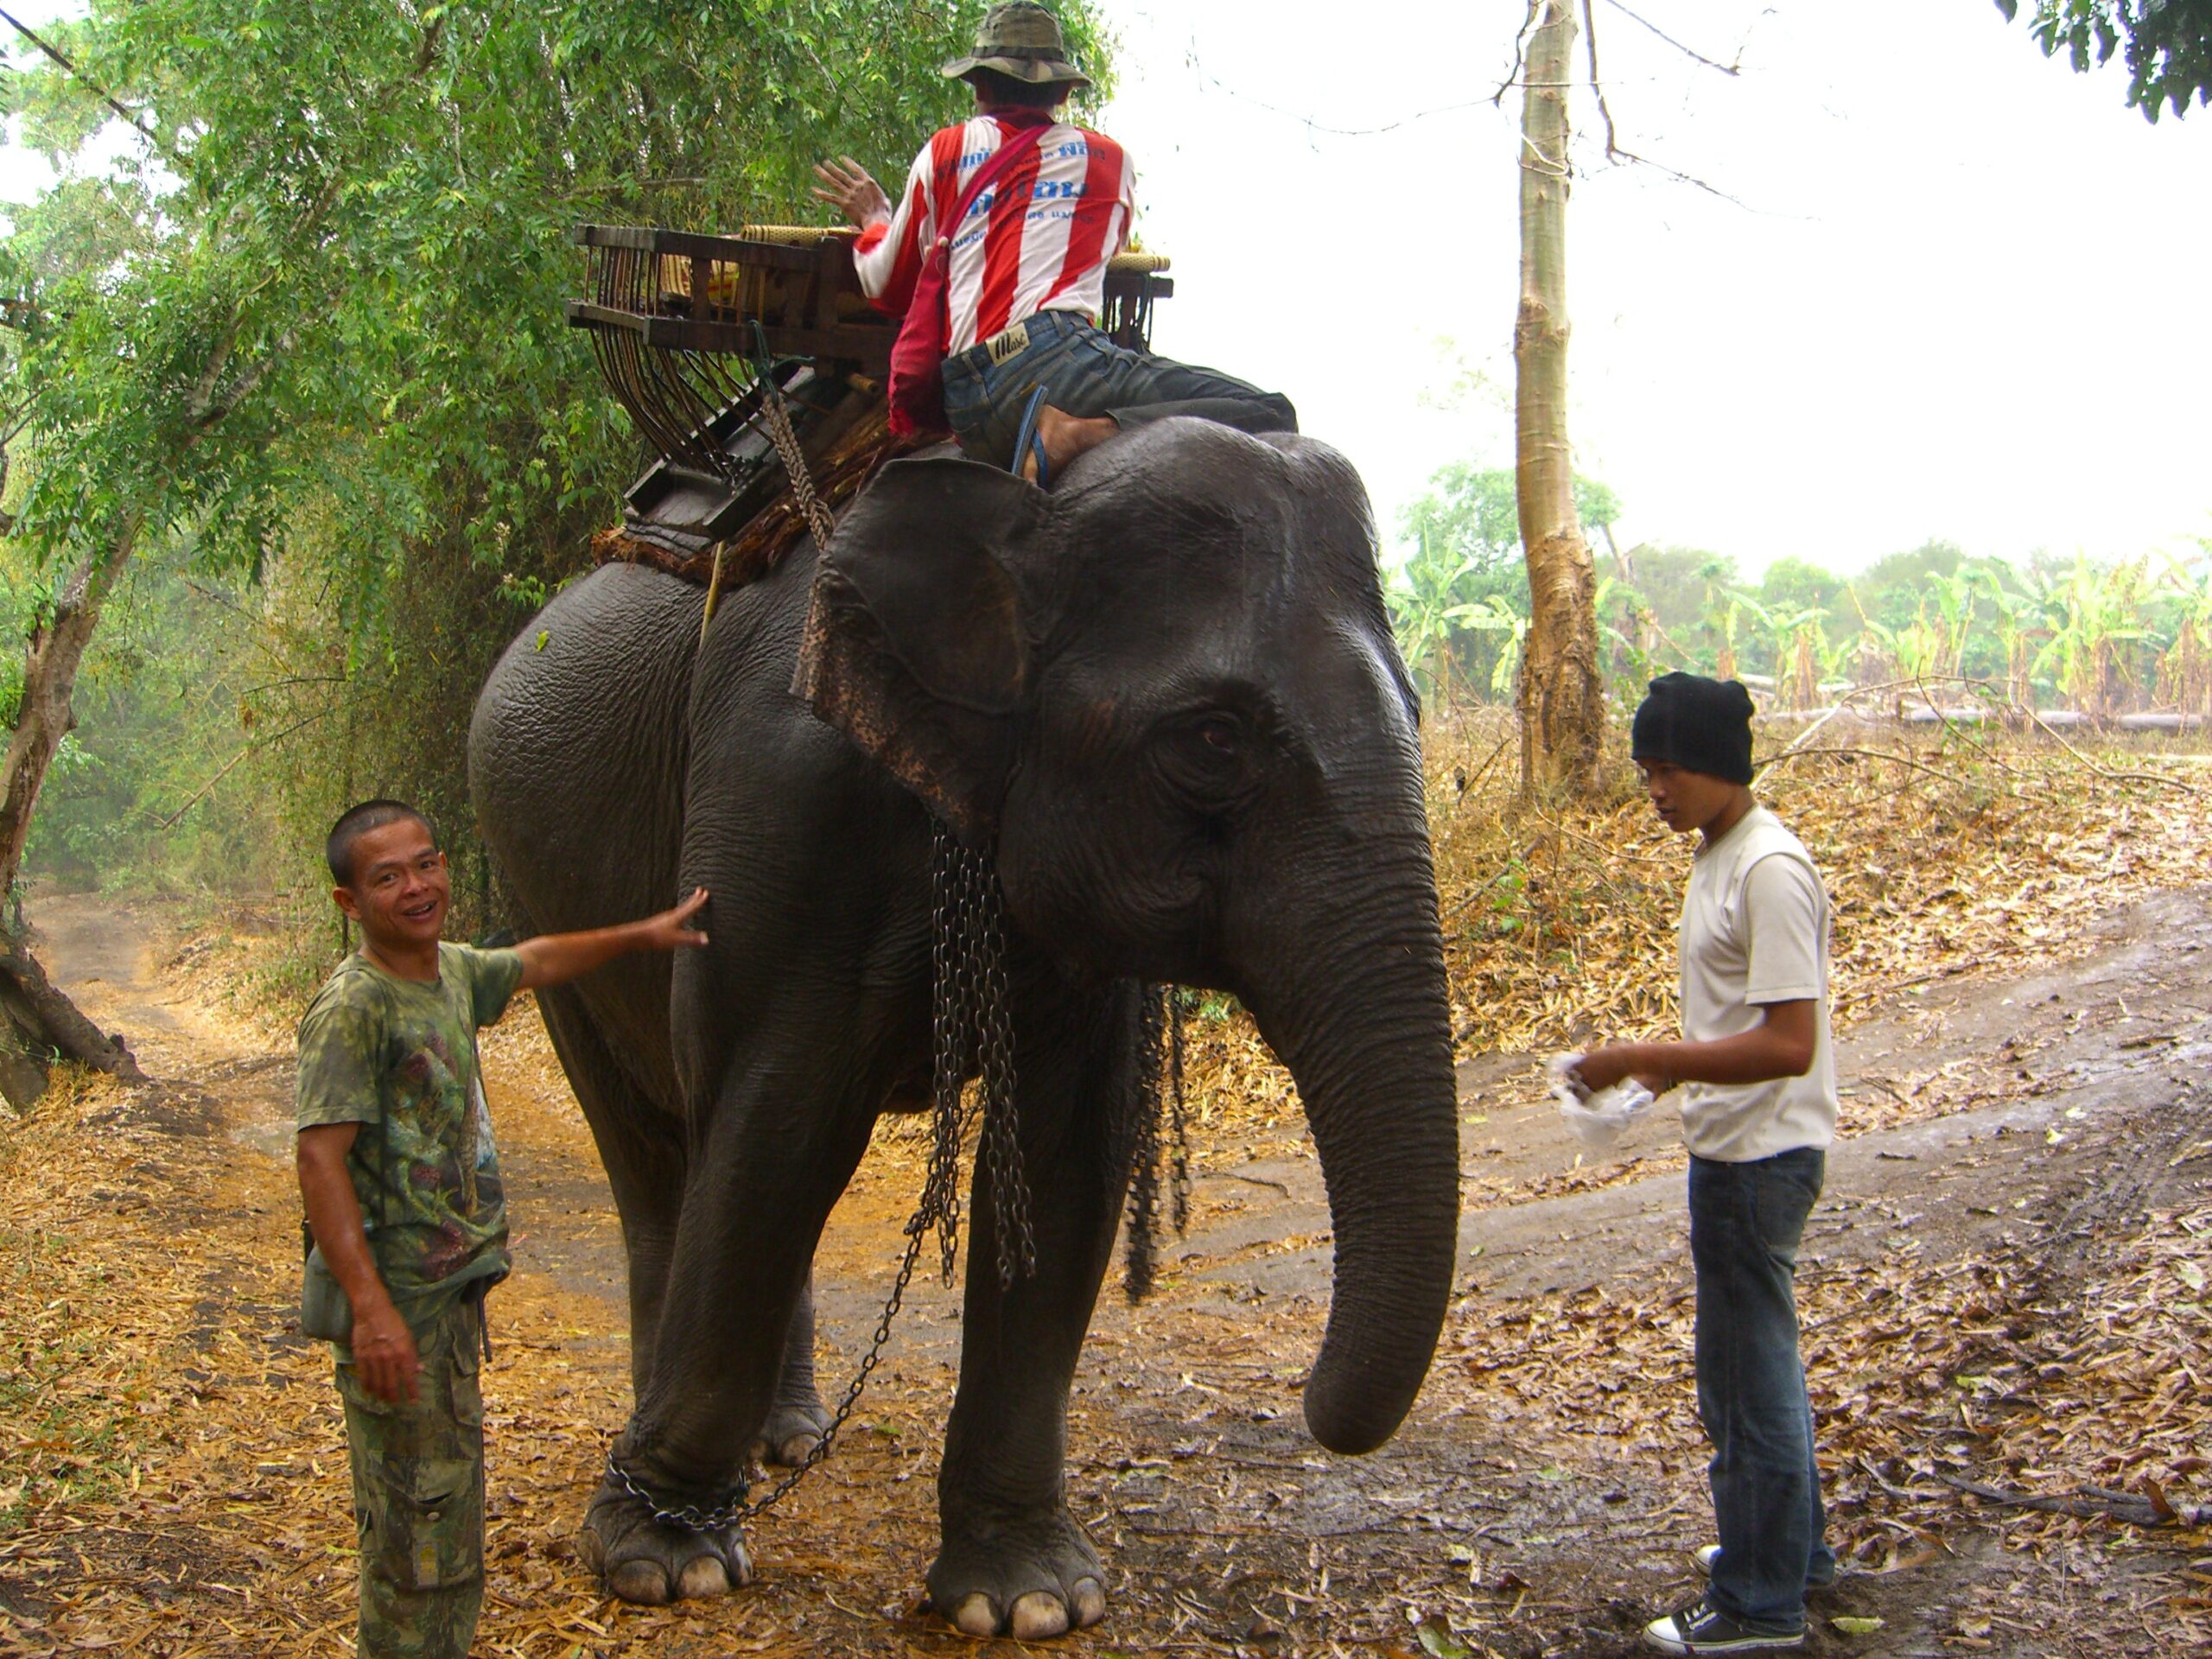 A jungle trek guide readies an elephant for a tourist